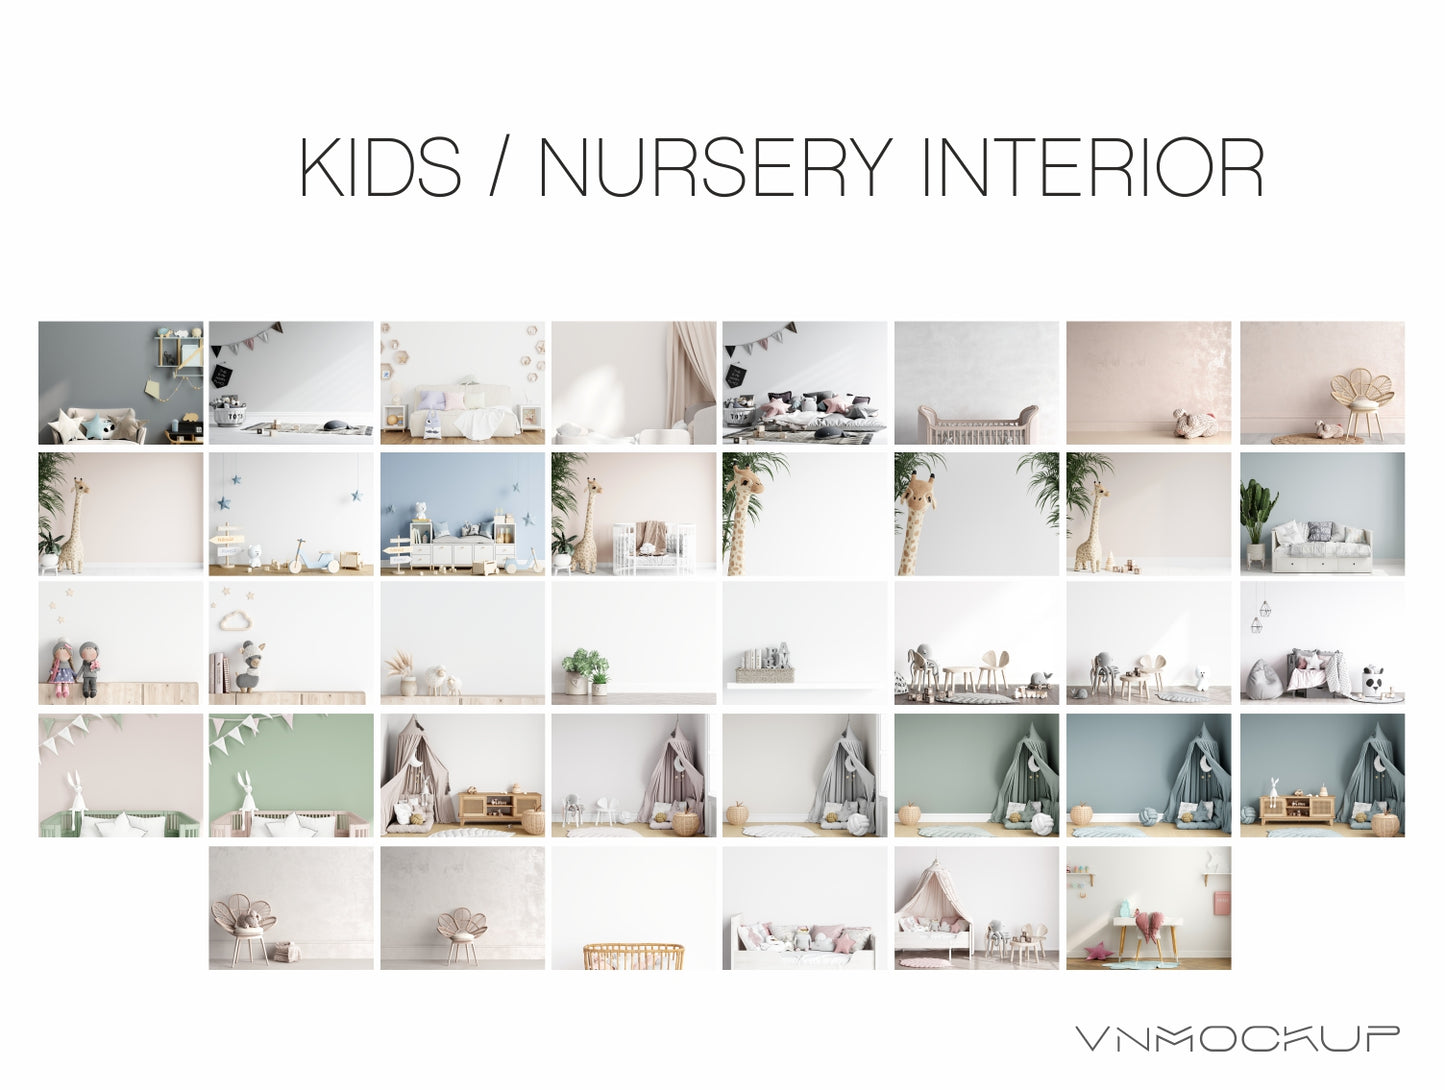 Mockup Mega Bundle - Interior Background JPG, Blank Wall Mockup, Living Room, Nursery, Kids Room, Kitchen, Christmas, Halloween, Bedroom